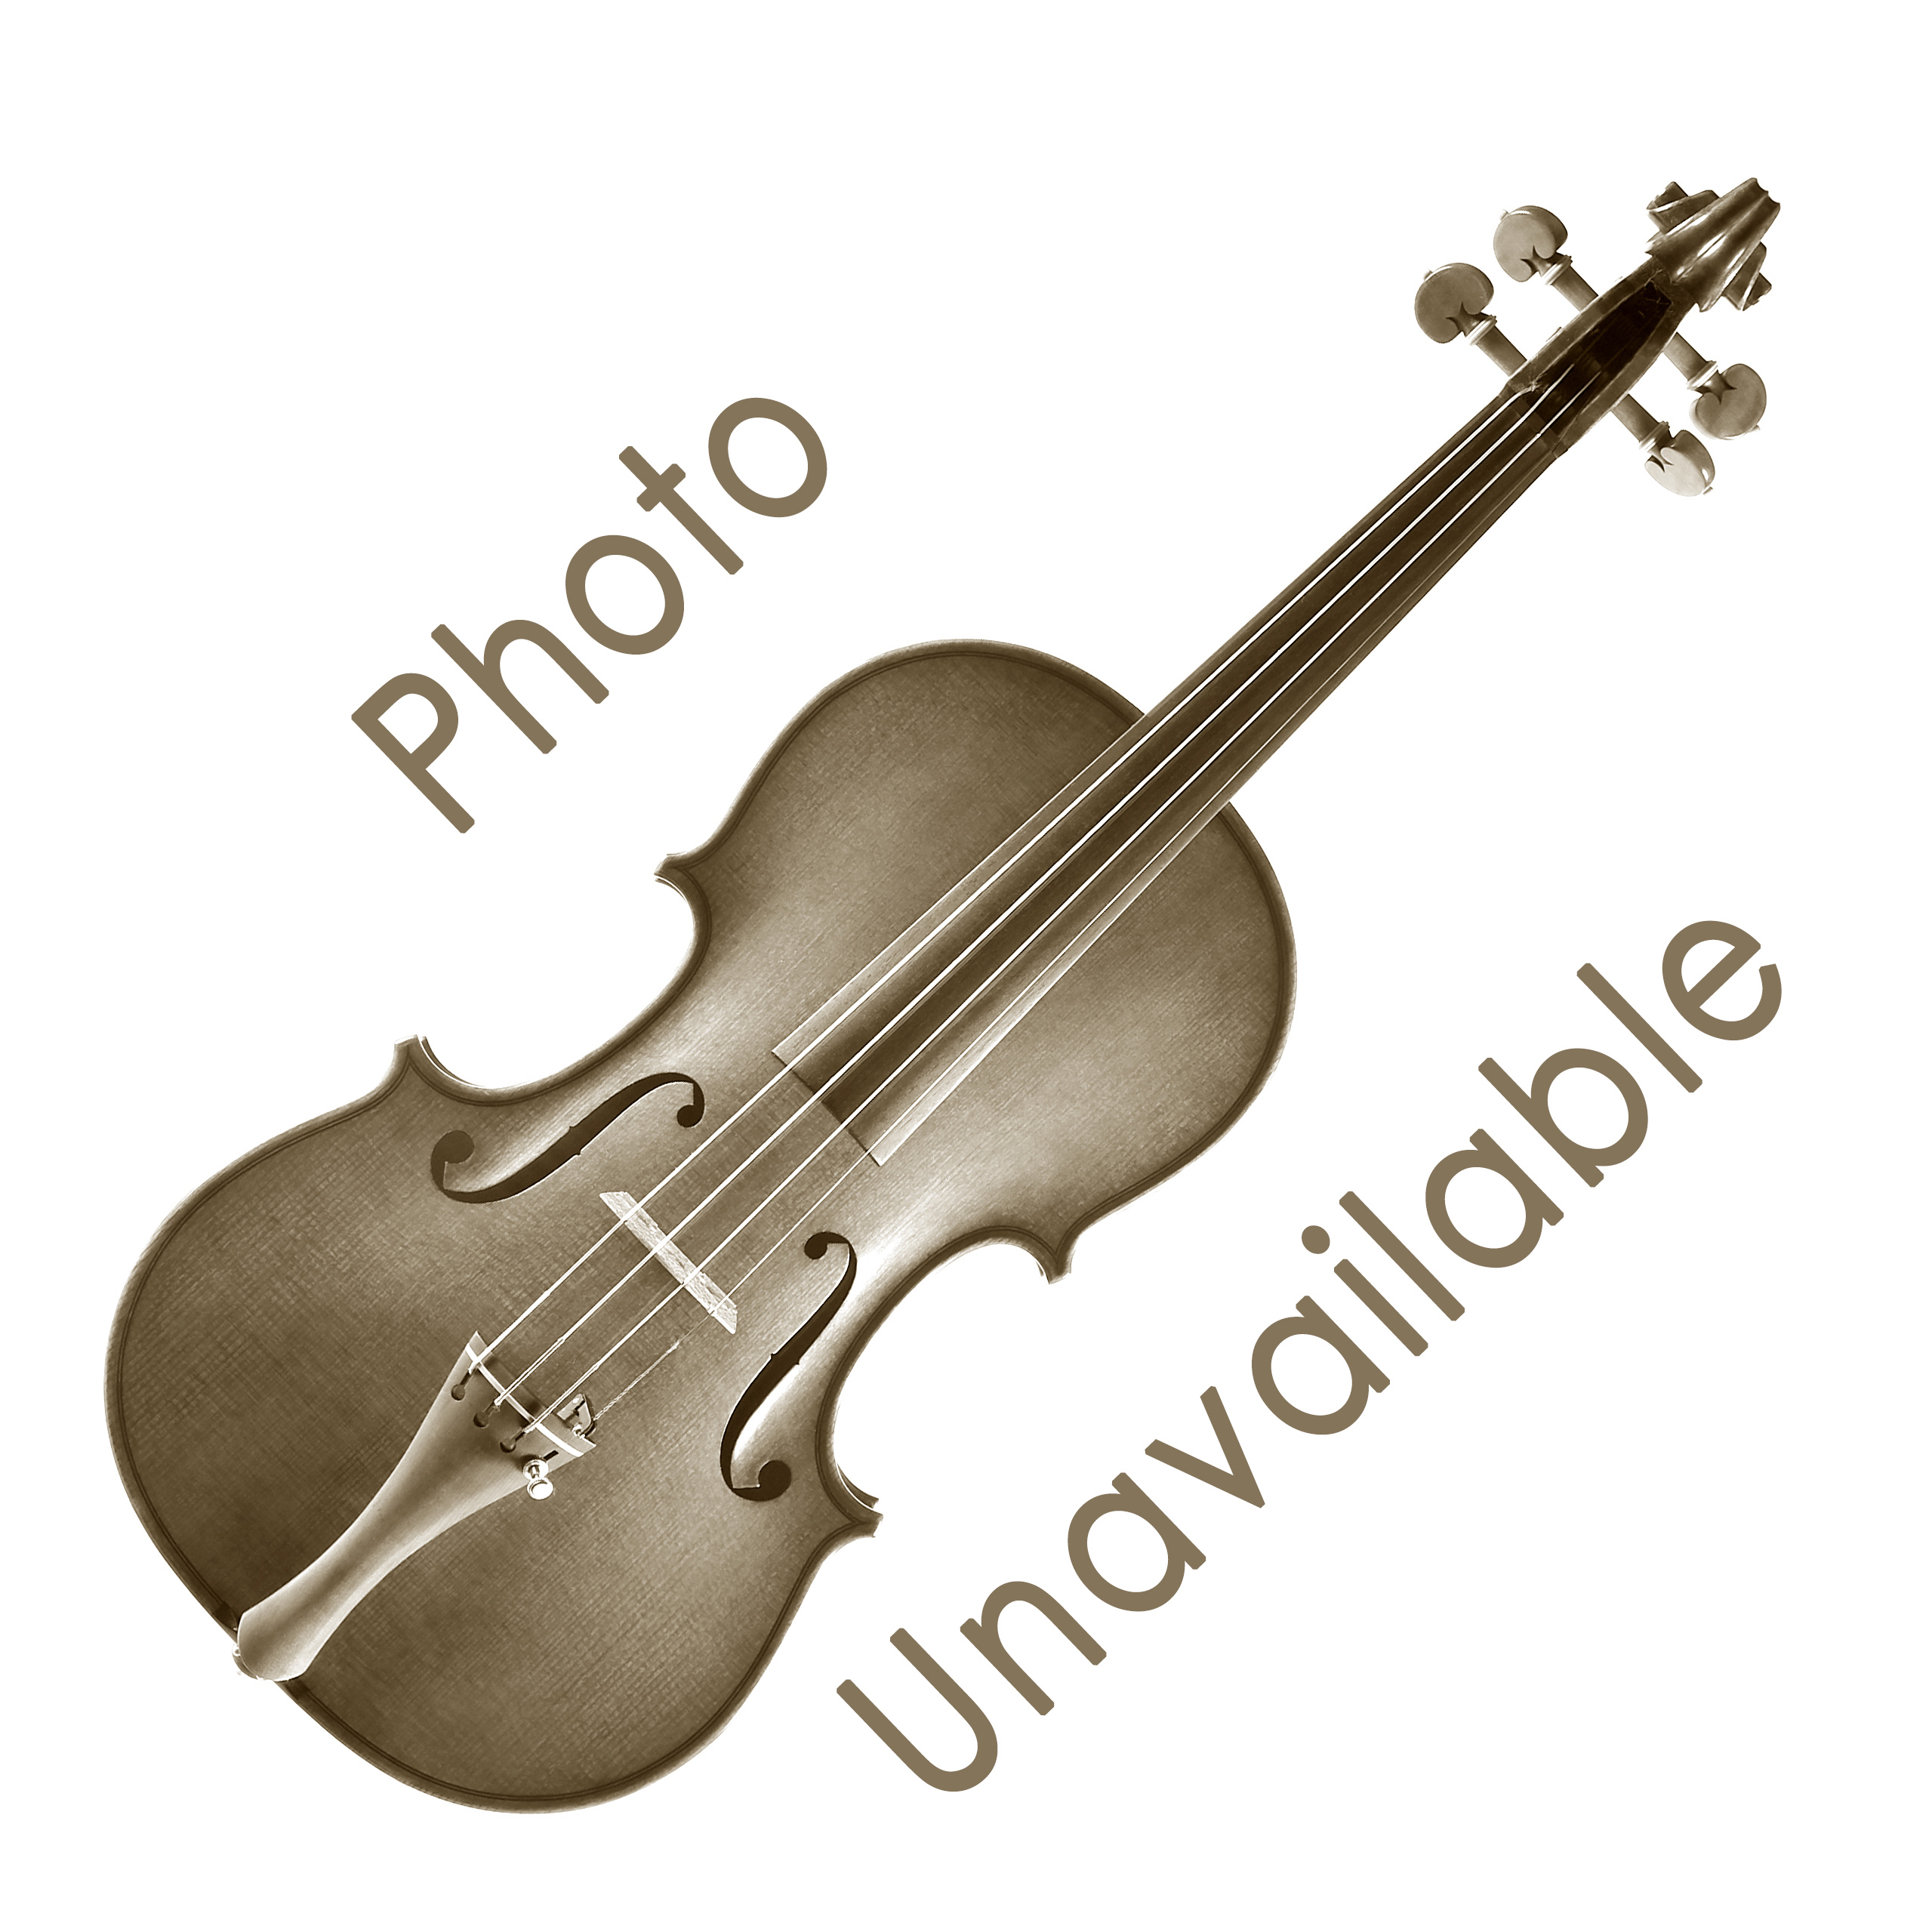 Fiddleheads Sun VN-100 Student Violin - 1/8 size